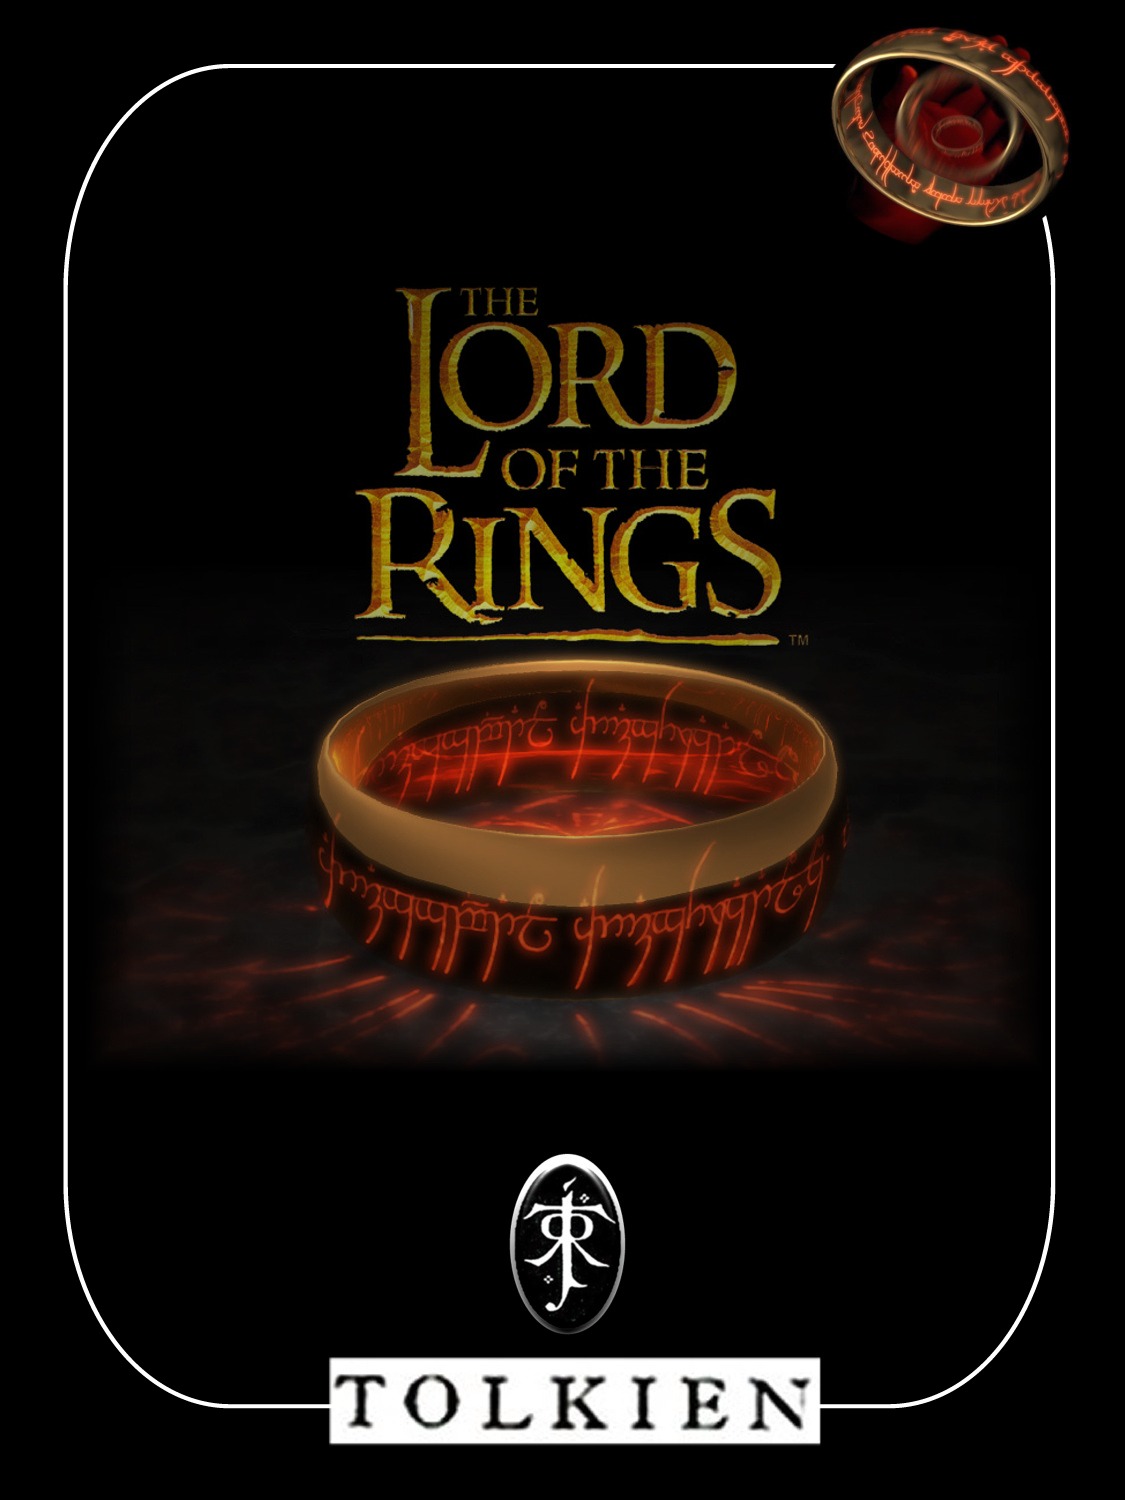 muis Fauteuil Direct Boekverslag Engels The lord of the rings door J.R.R. Tolkien (4e klas havo)  | Scholieren.com